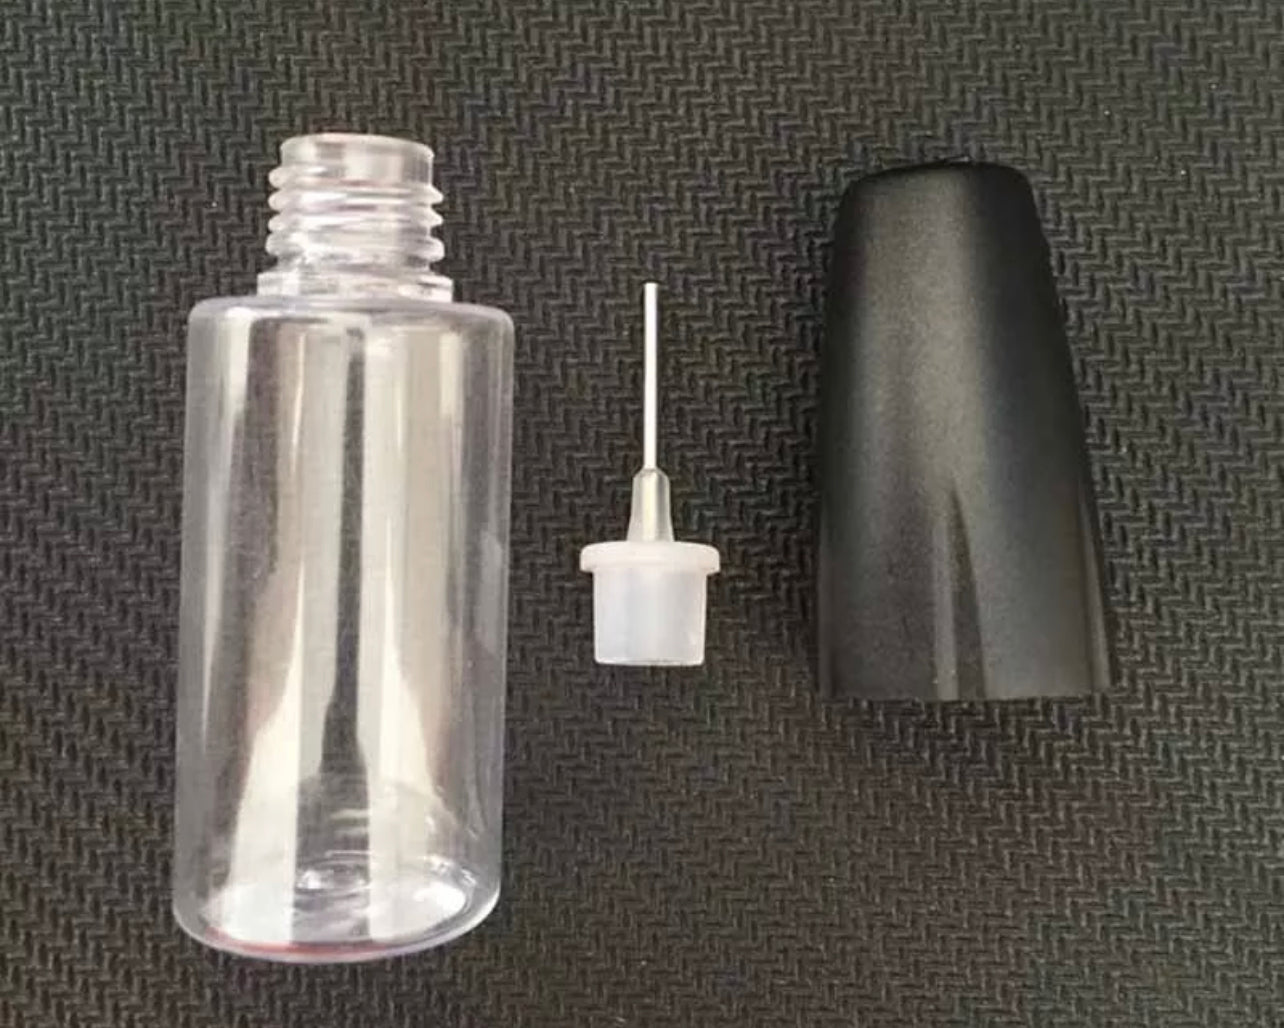 Microtip Needle Applicator Bottle